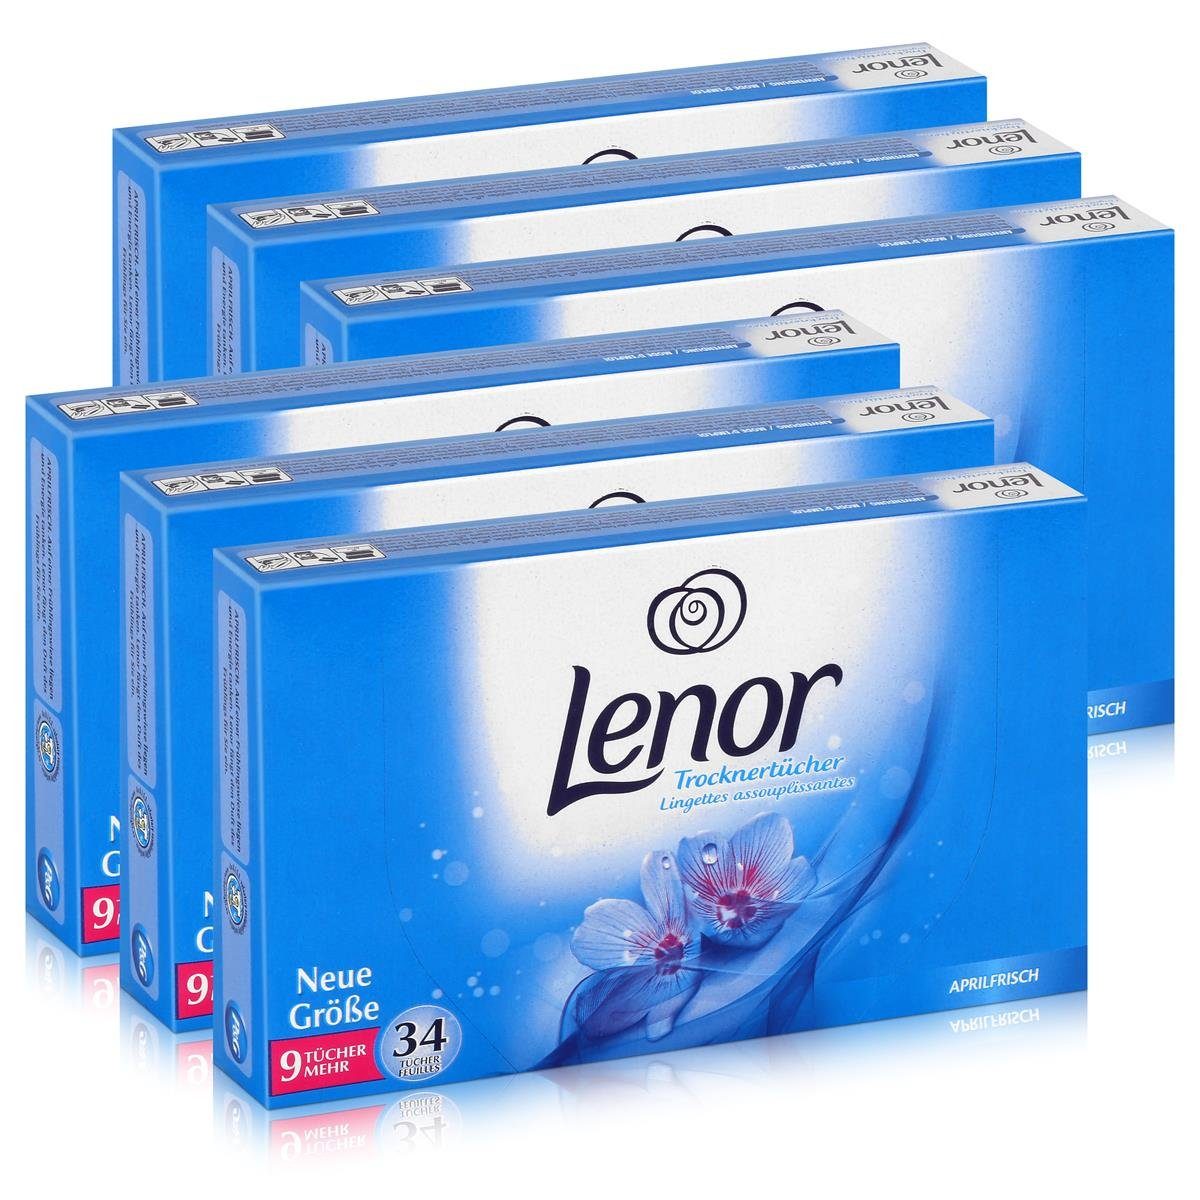 Lenor 34 im Trockner Aprilfrisch Tücher Trocknertücher - Wäschepflege LENOR Spezialwaschmittel